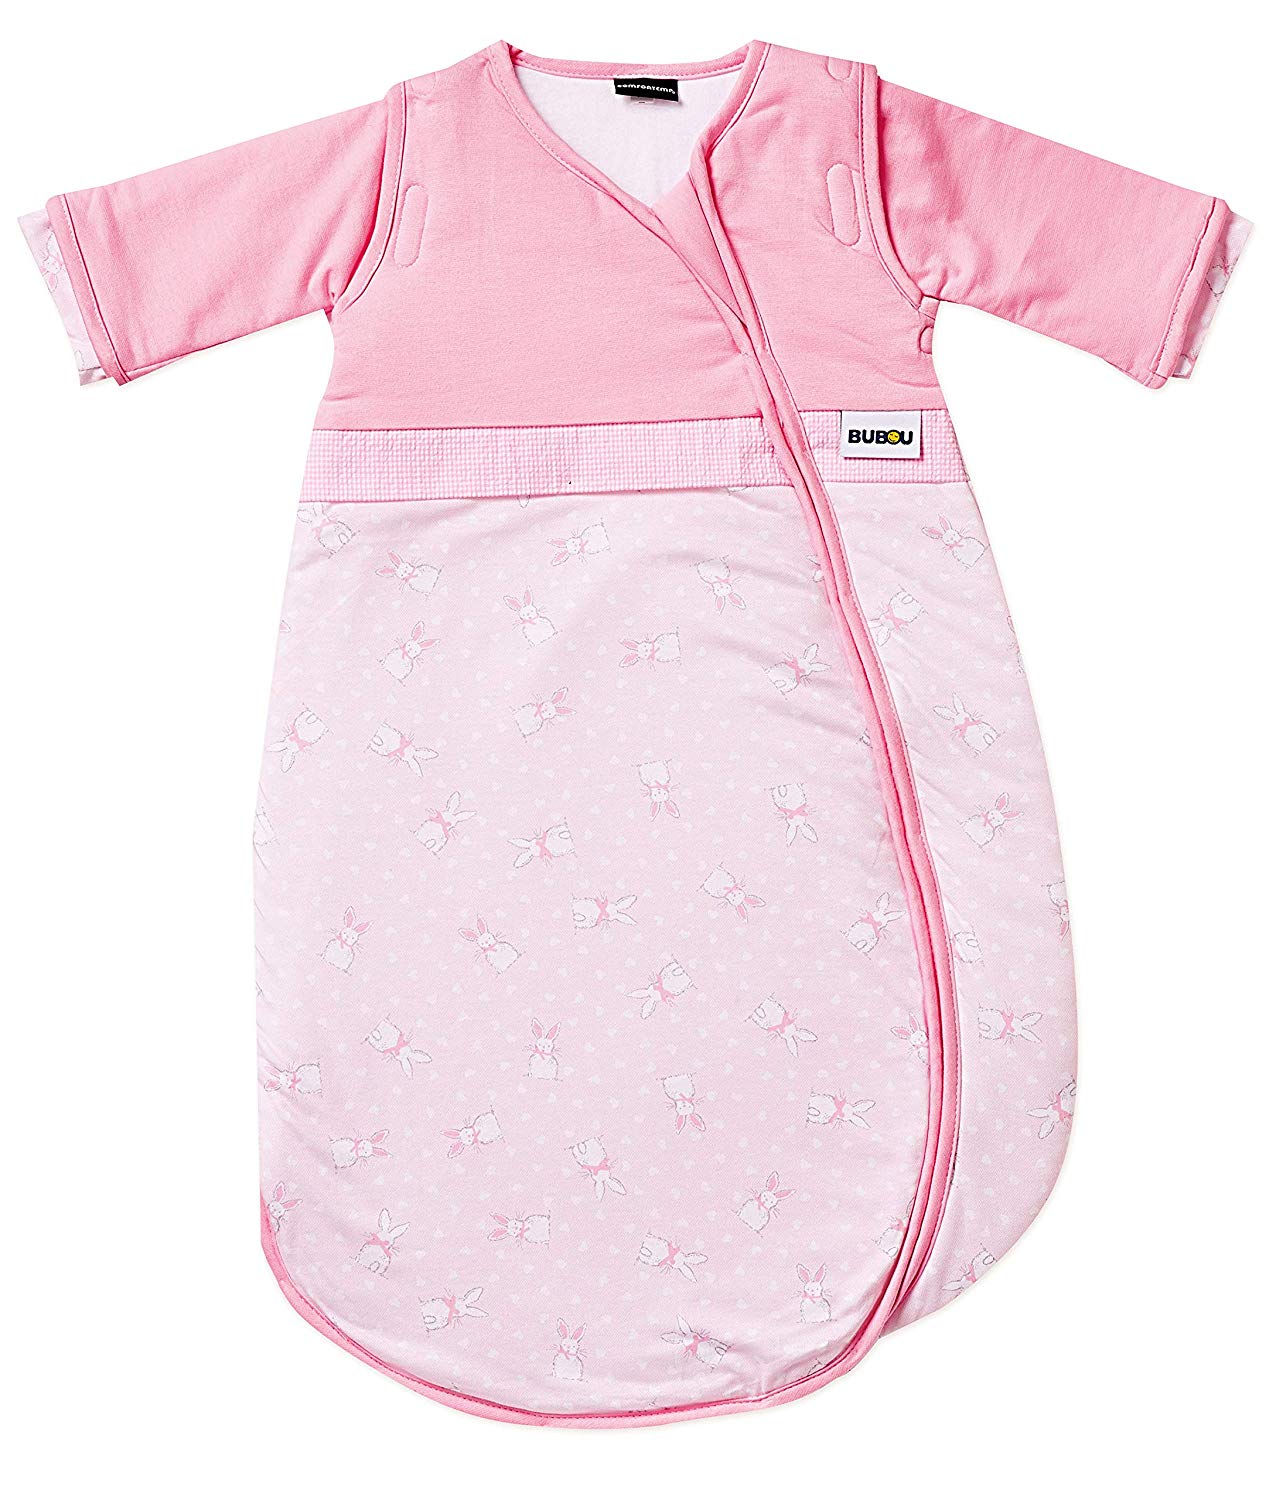 Gesslein Bubou Design 179 Temperature Regulating Sleeping Bag for Babies / Children Size 70 Pink with Rabbit